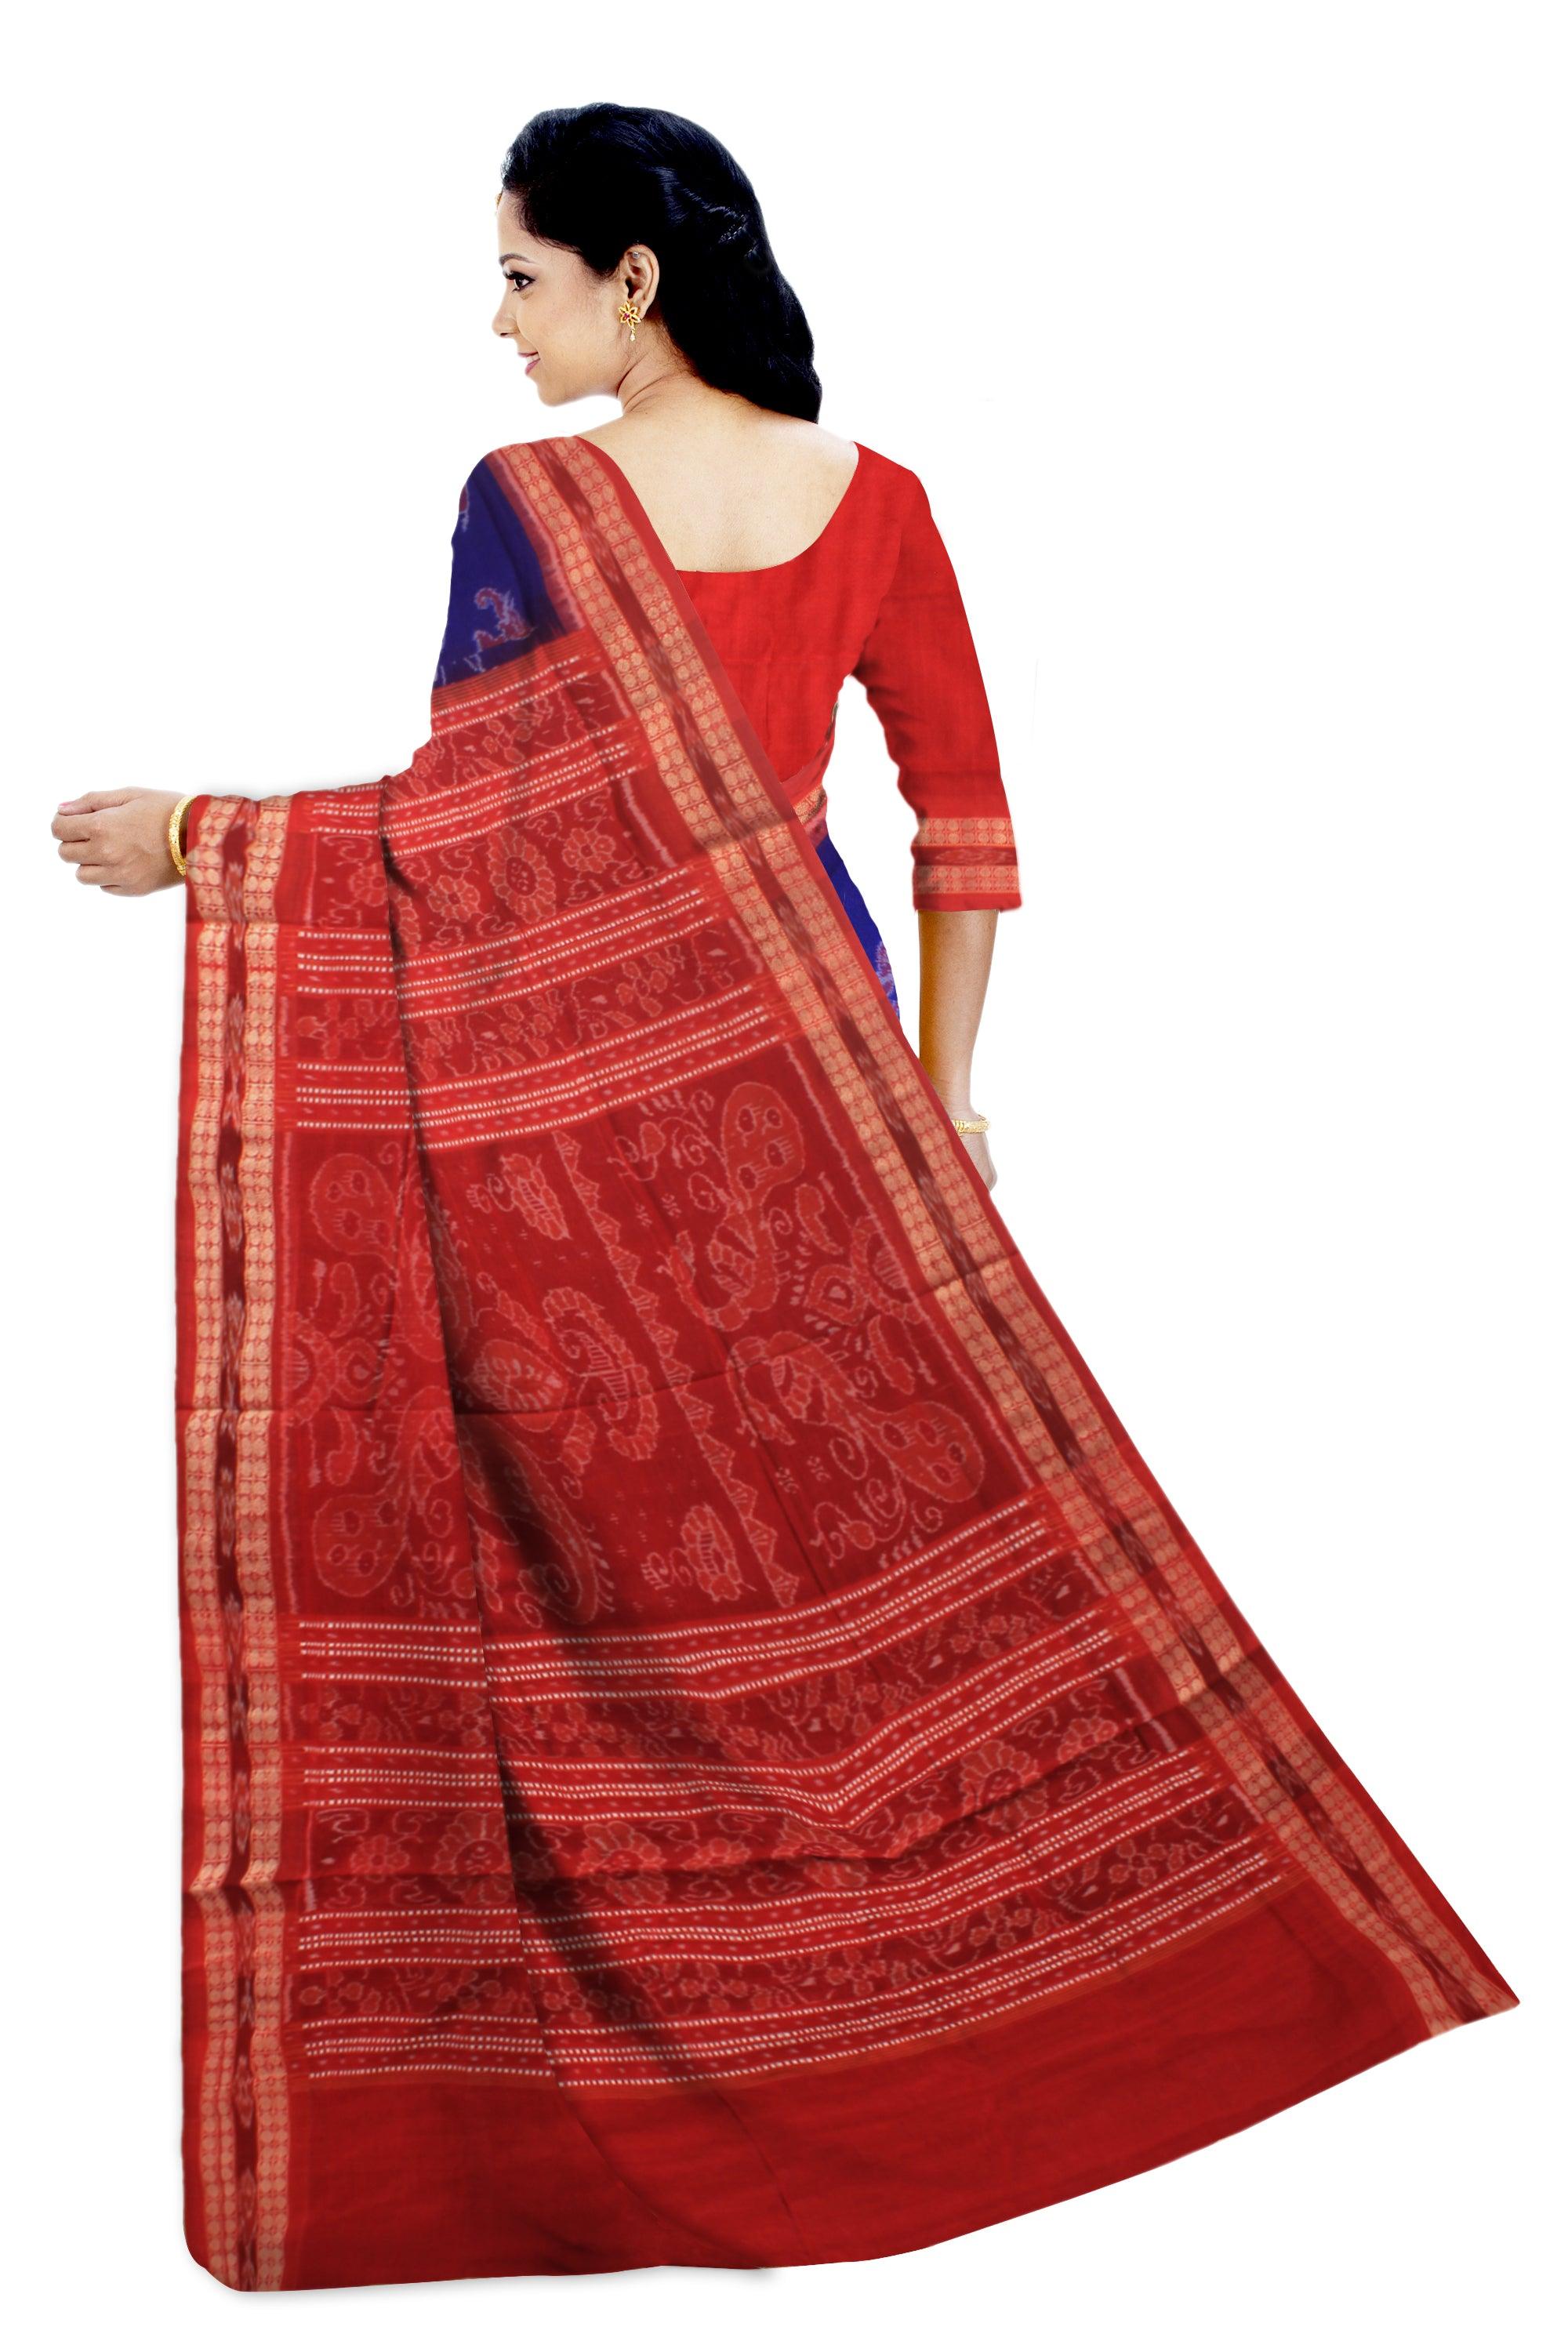 Auhentic Sambalpuri Cotton  saree in dark Red and Blue with blouse piece  Red color bamkei design, - Koshali Arts & Crafts Enterprise